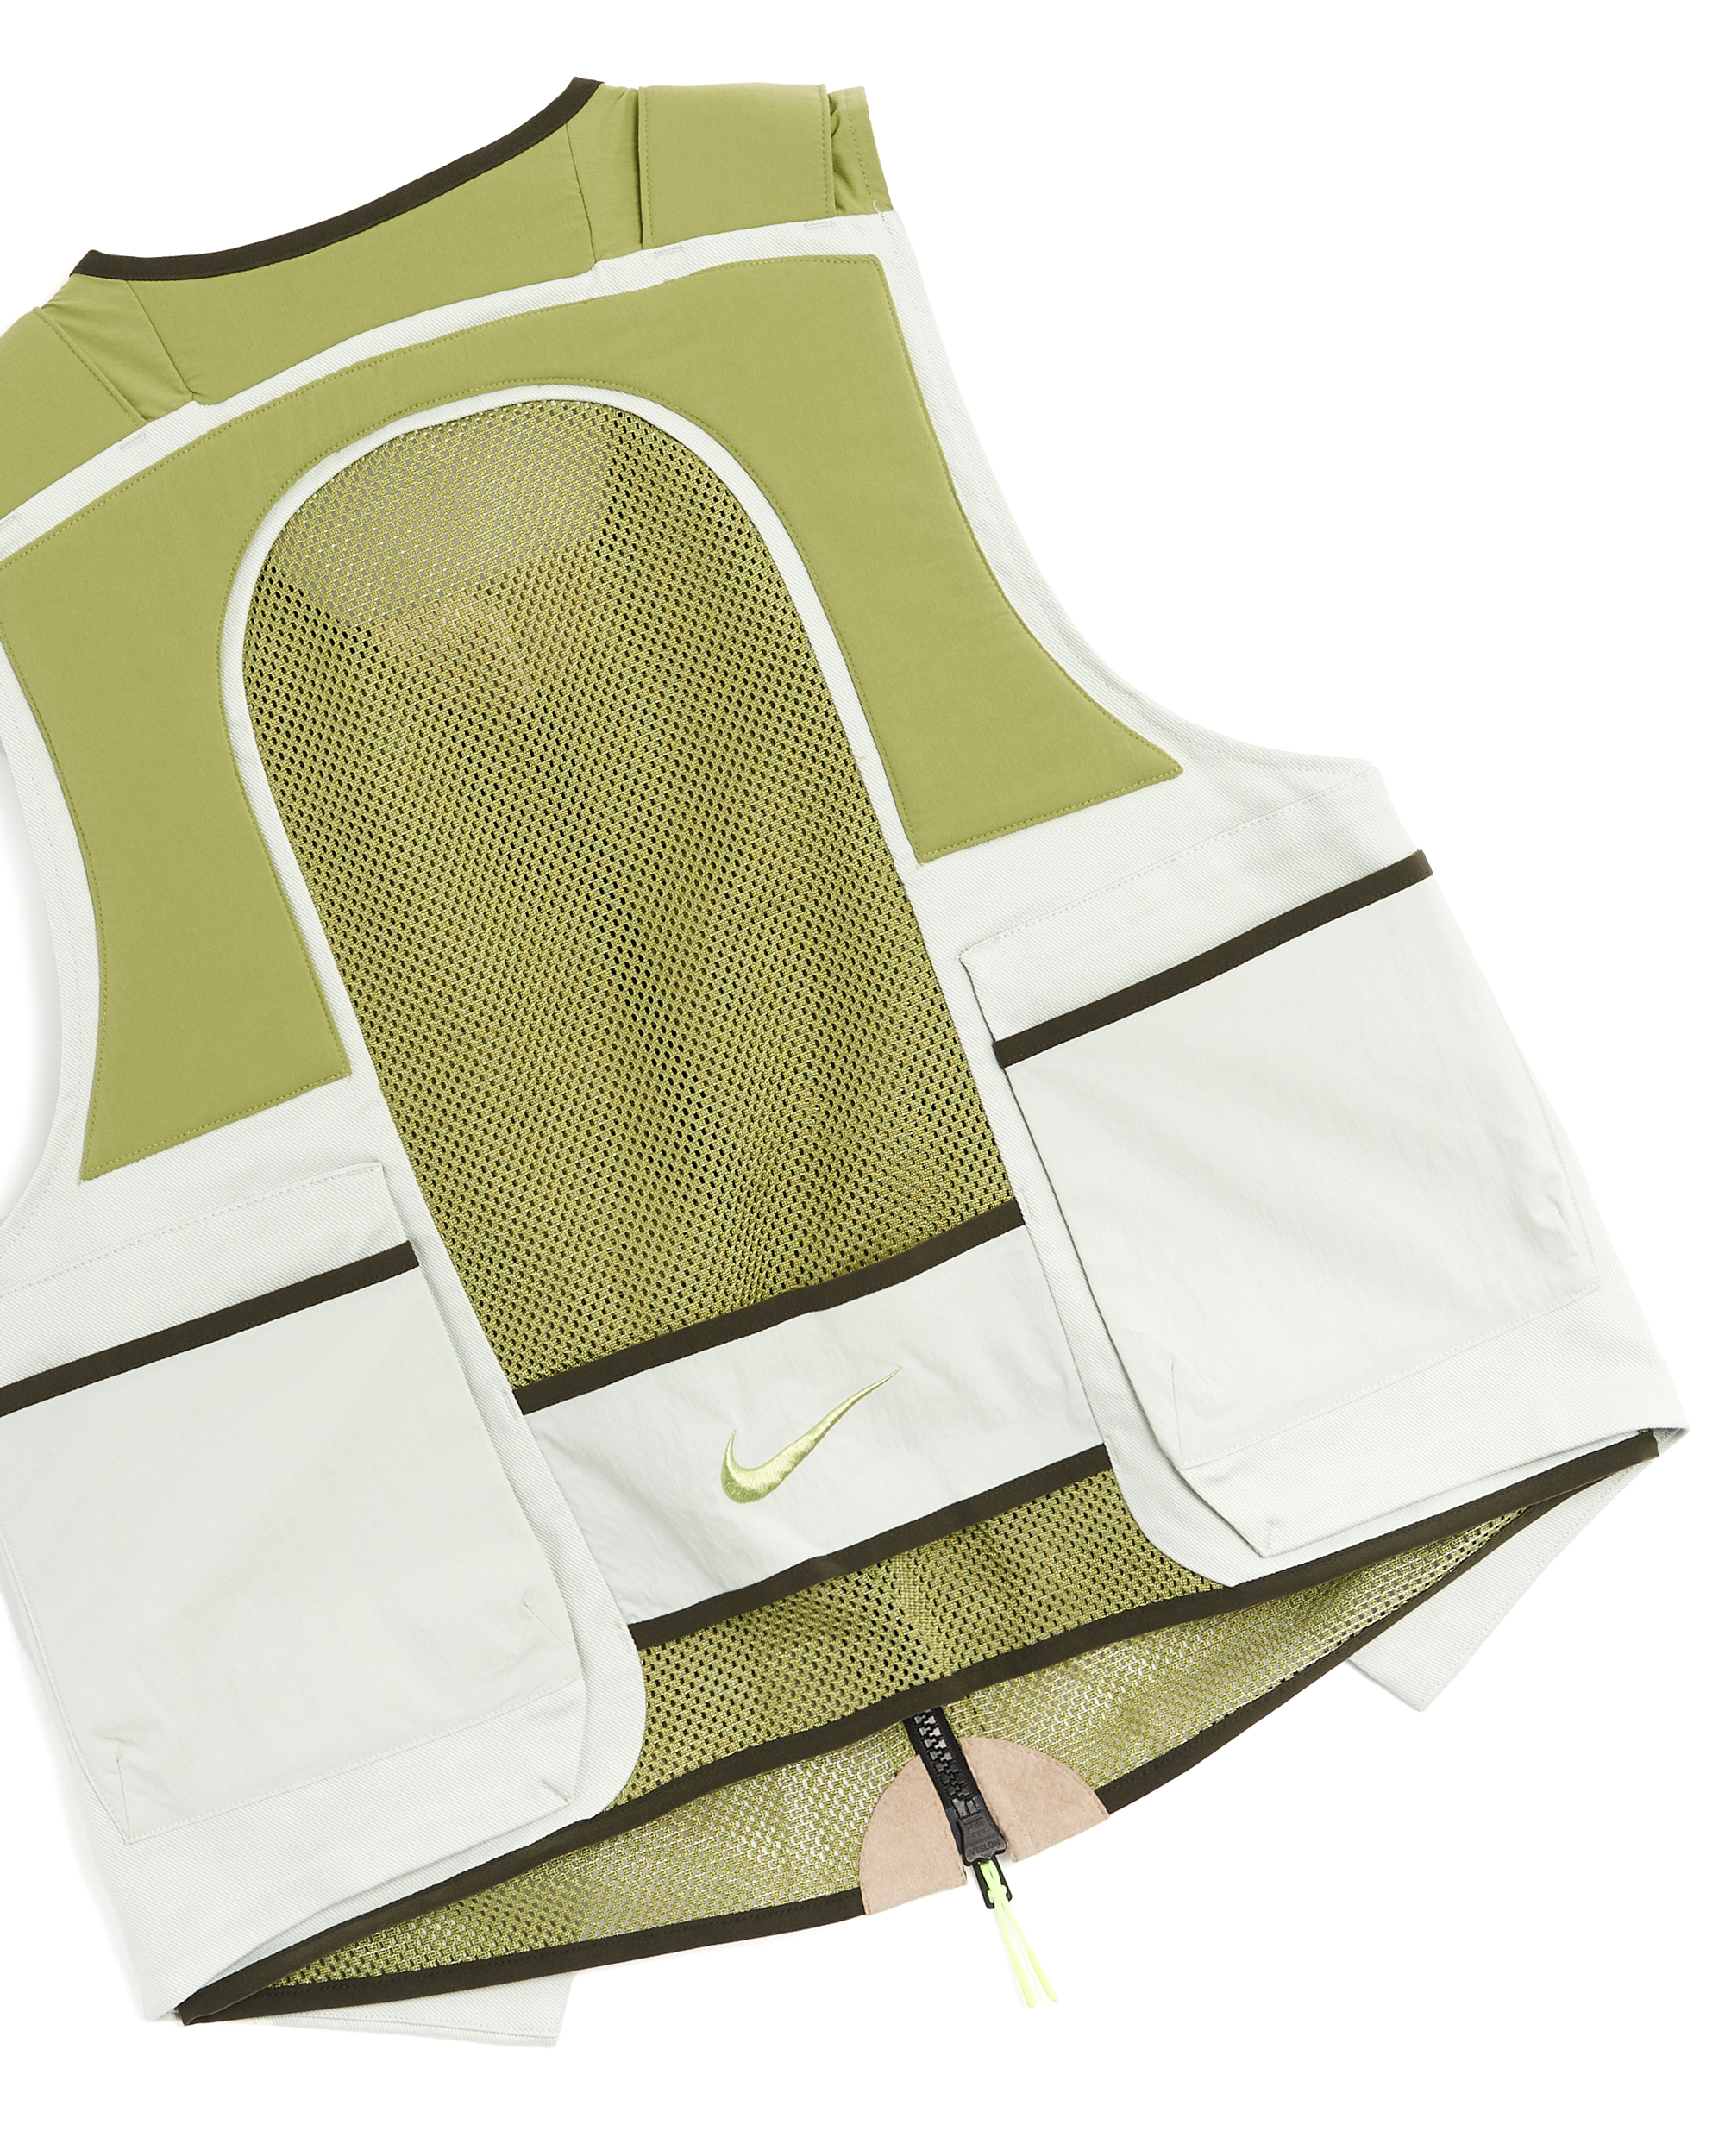 ISPA Vest 2.0 - Light Silver / Alligator / Sequoia